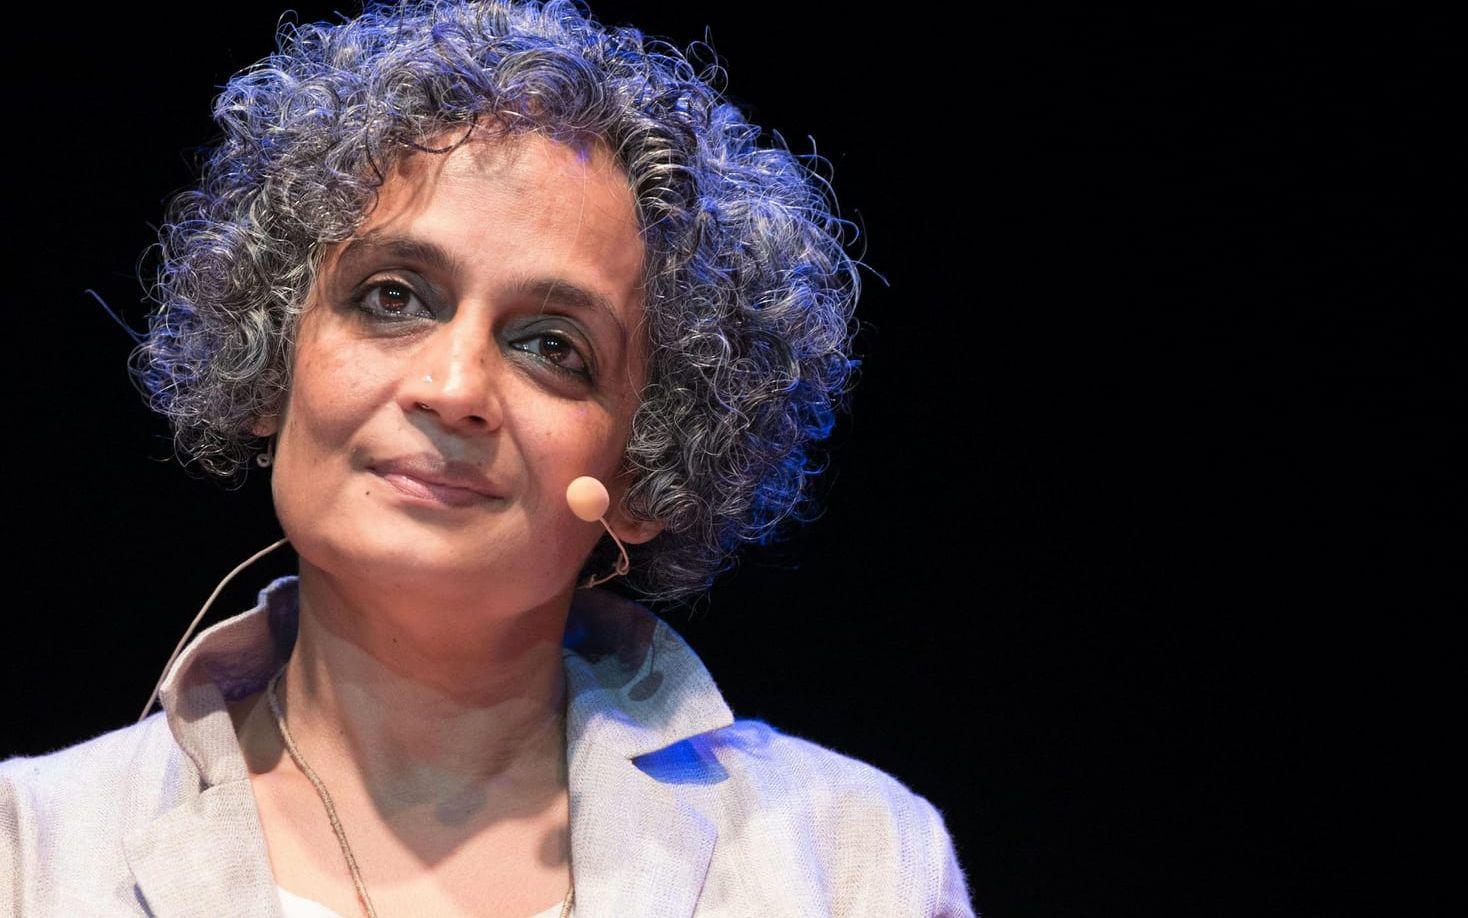 Författaren Arundhati Roy gästar Bokmässan i Göteborg i september. Bild: Giorgio Onorati